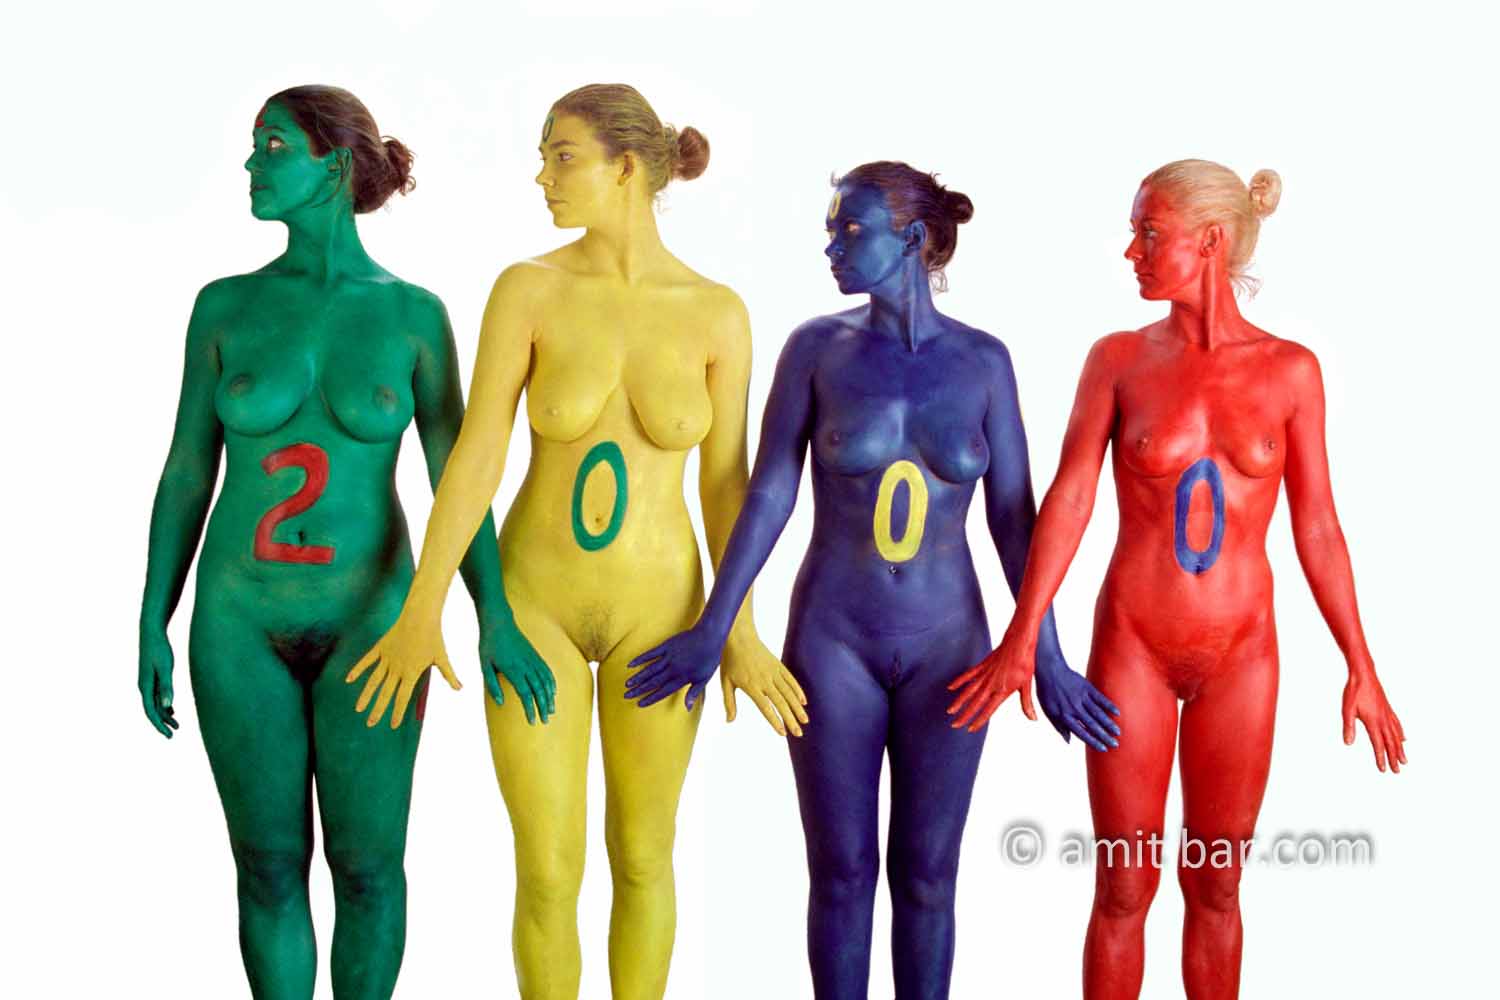 Millenium girls III: Four body painted girls are celebrating the mlilenium